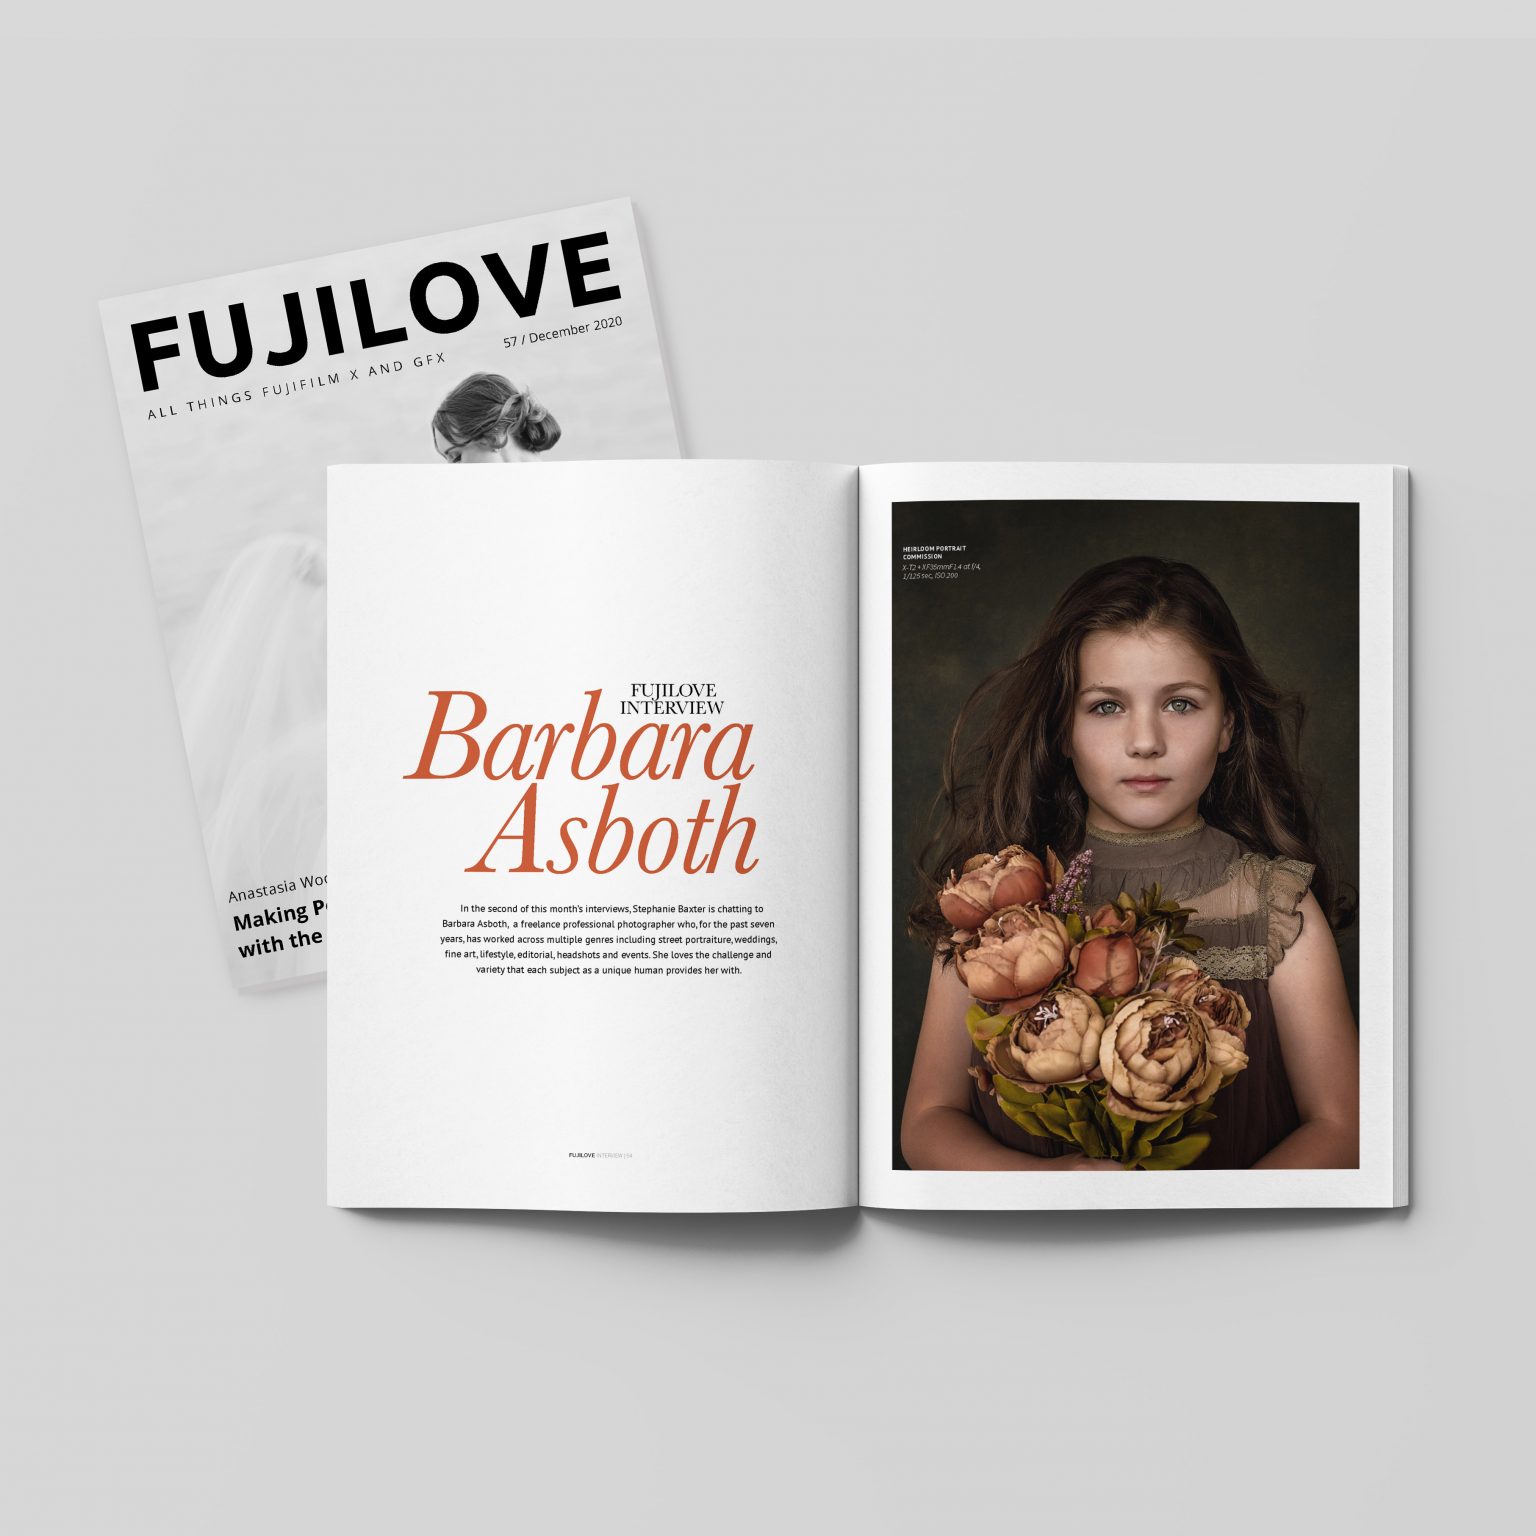 Barbara Asboth Photography interview in FUJILOVE magazine, December 2020